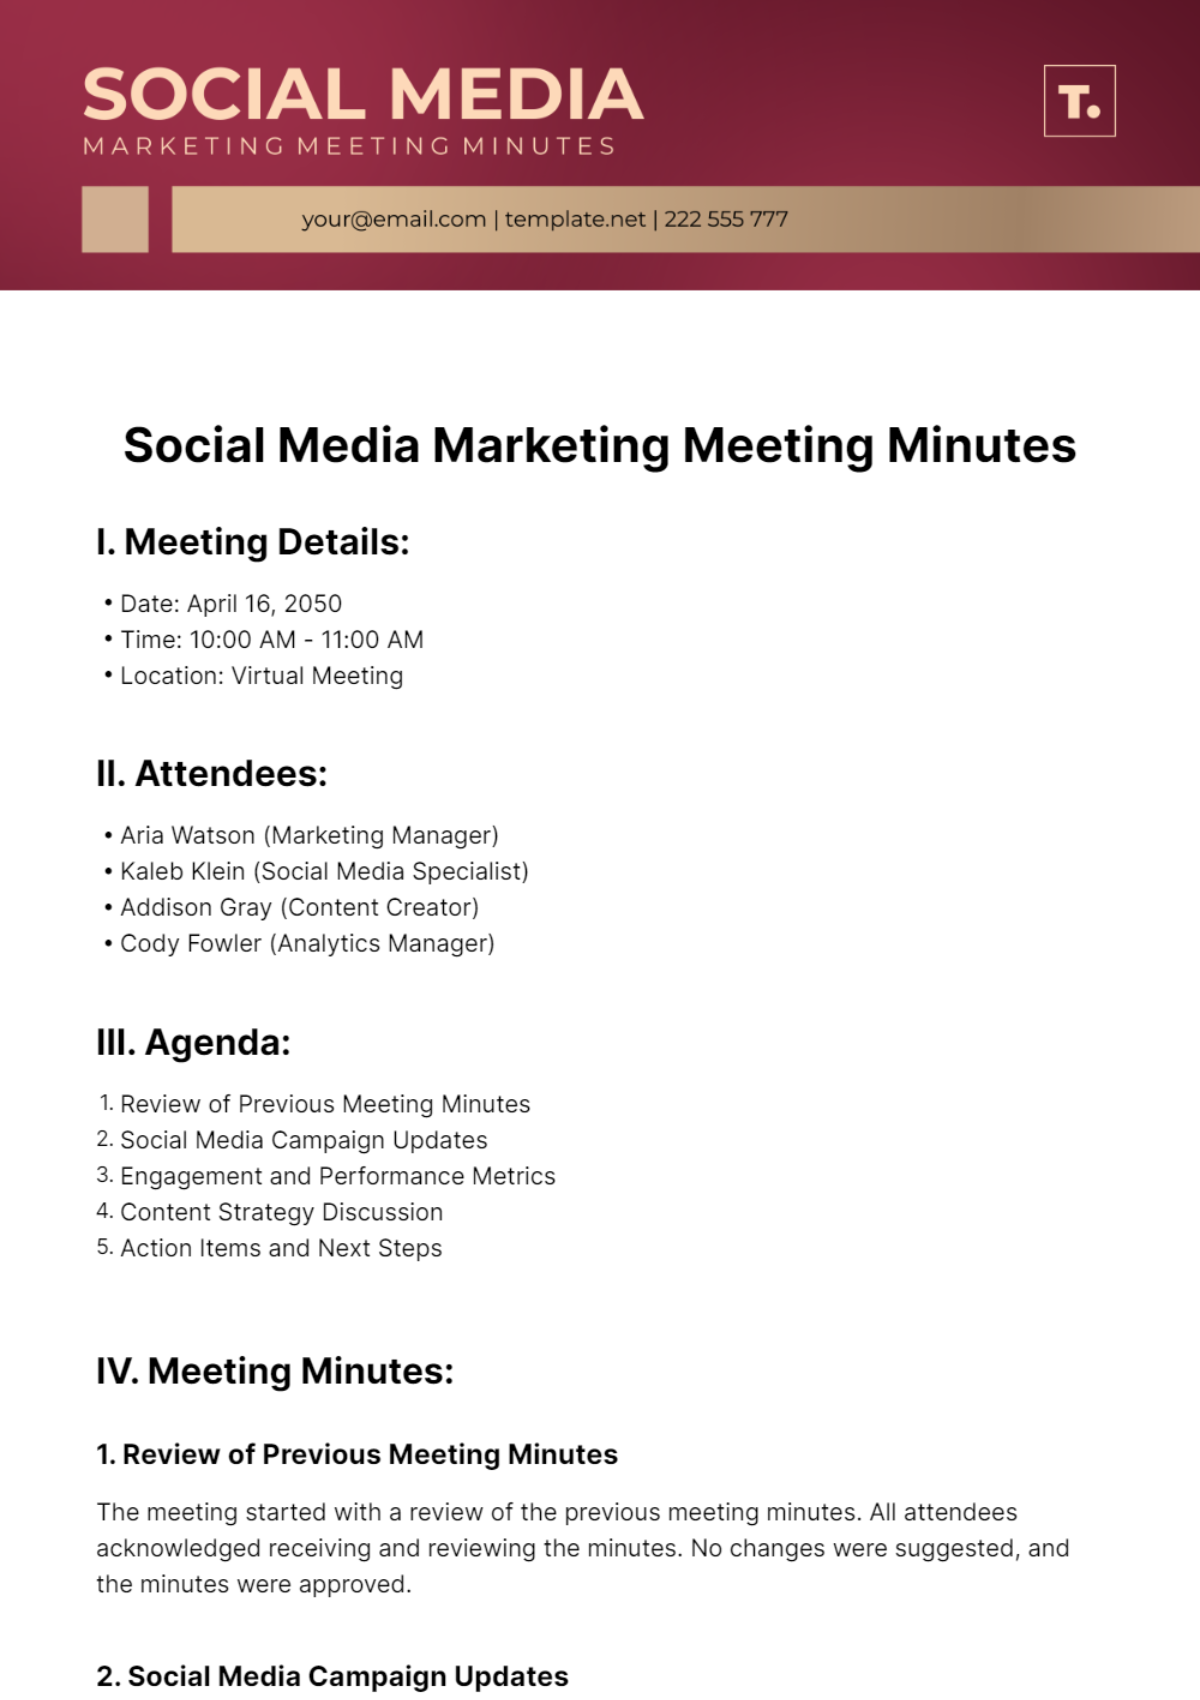 Social Media Marketing Meeting Minutes Template